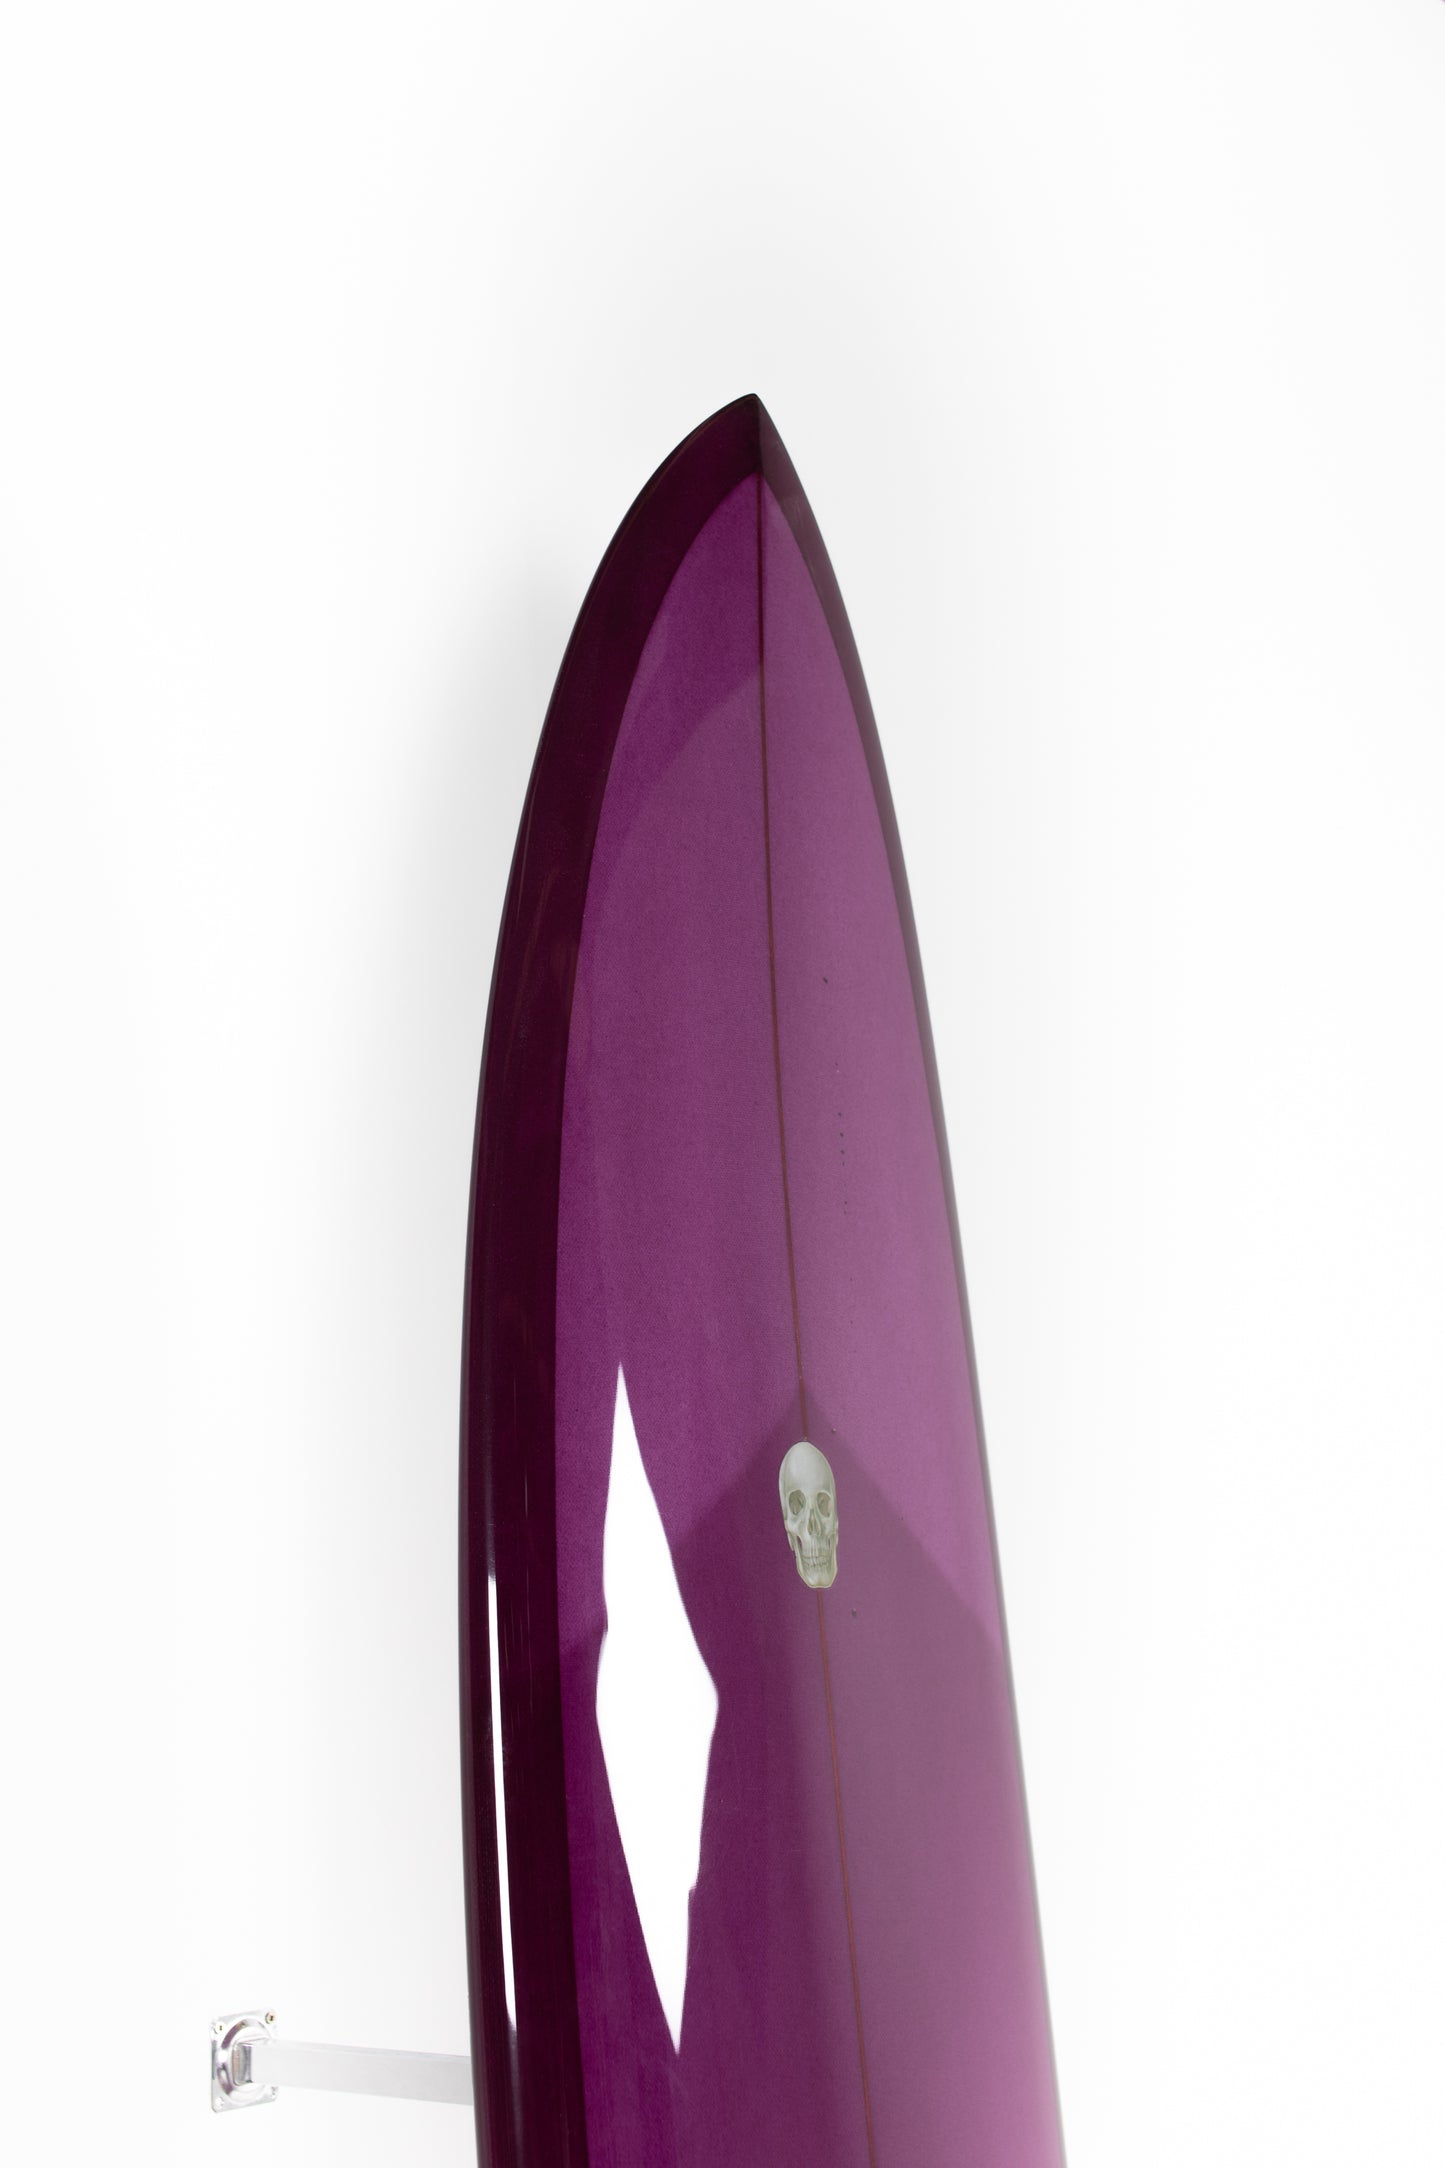 
                  
                    Pukas Surf Shop - Christenson Surfboards - TWIN TRACKER - 7'6" x 21 3/8  x 3 - CX03315
                  
                